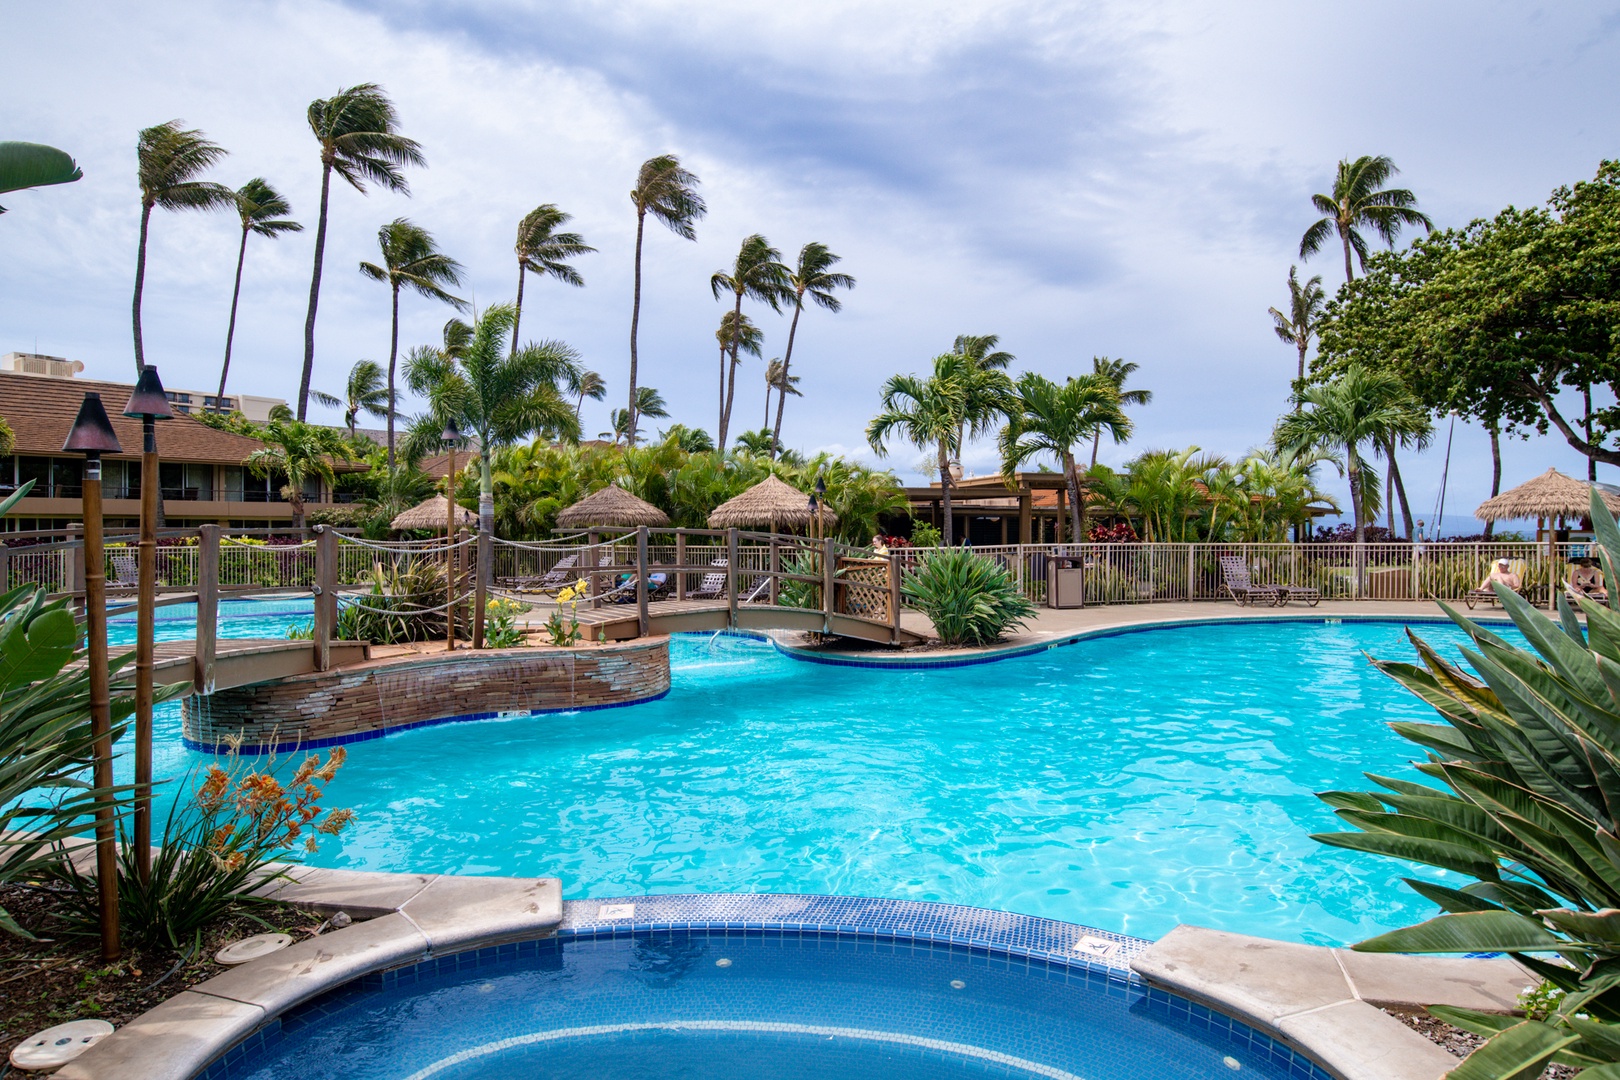 Lahaina Vacation Rentals, Maui Kaanapali Villas B225 - Large heated pools to explore